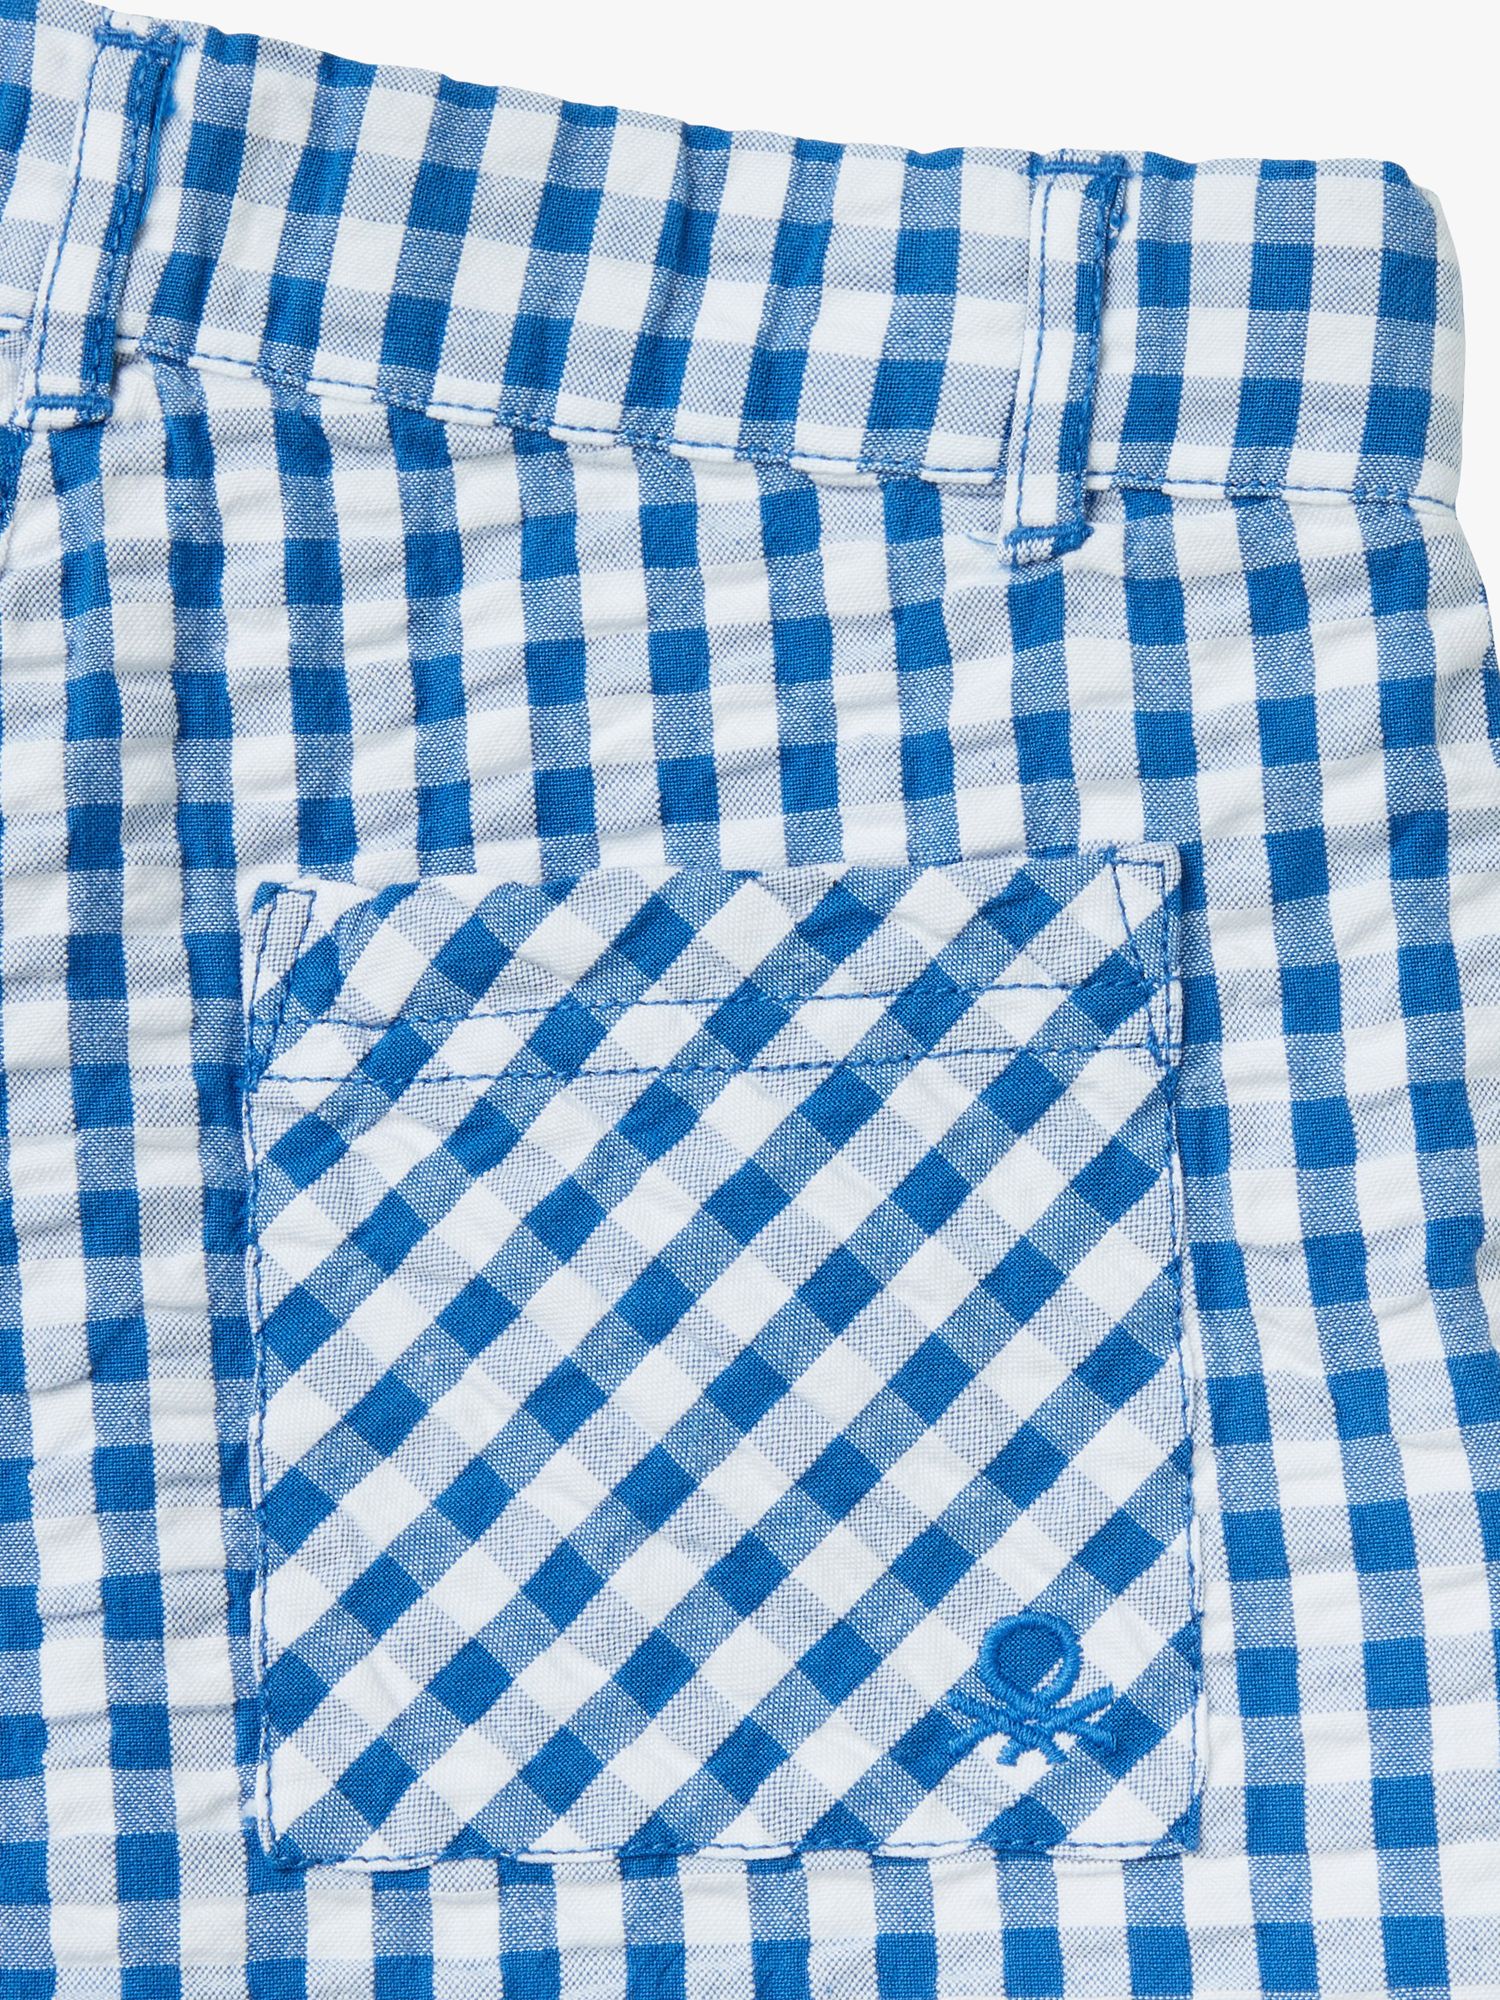 Benetton Kids' Gingham Cotton Shorts, Blue/White, 3-4 years